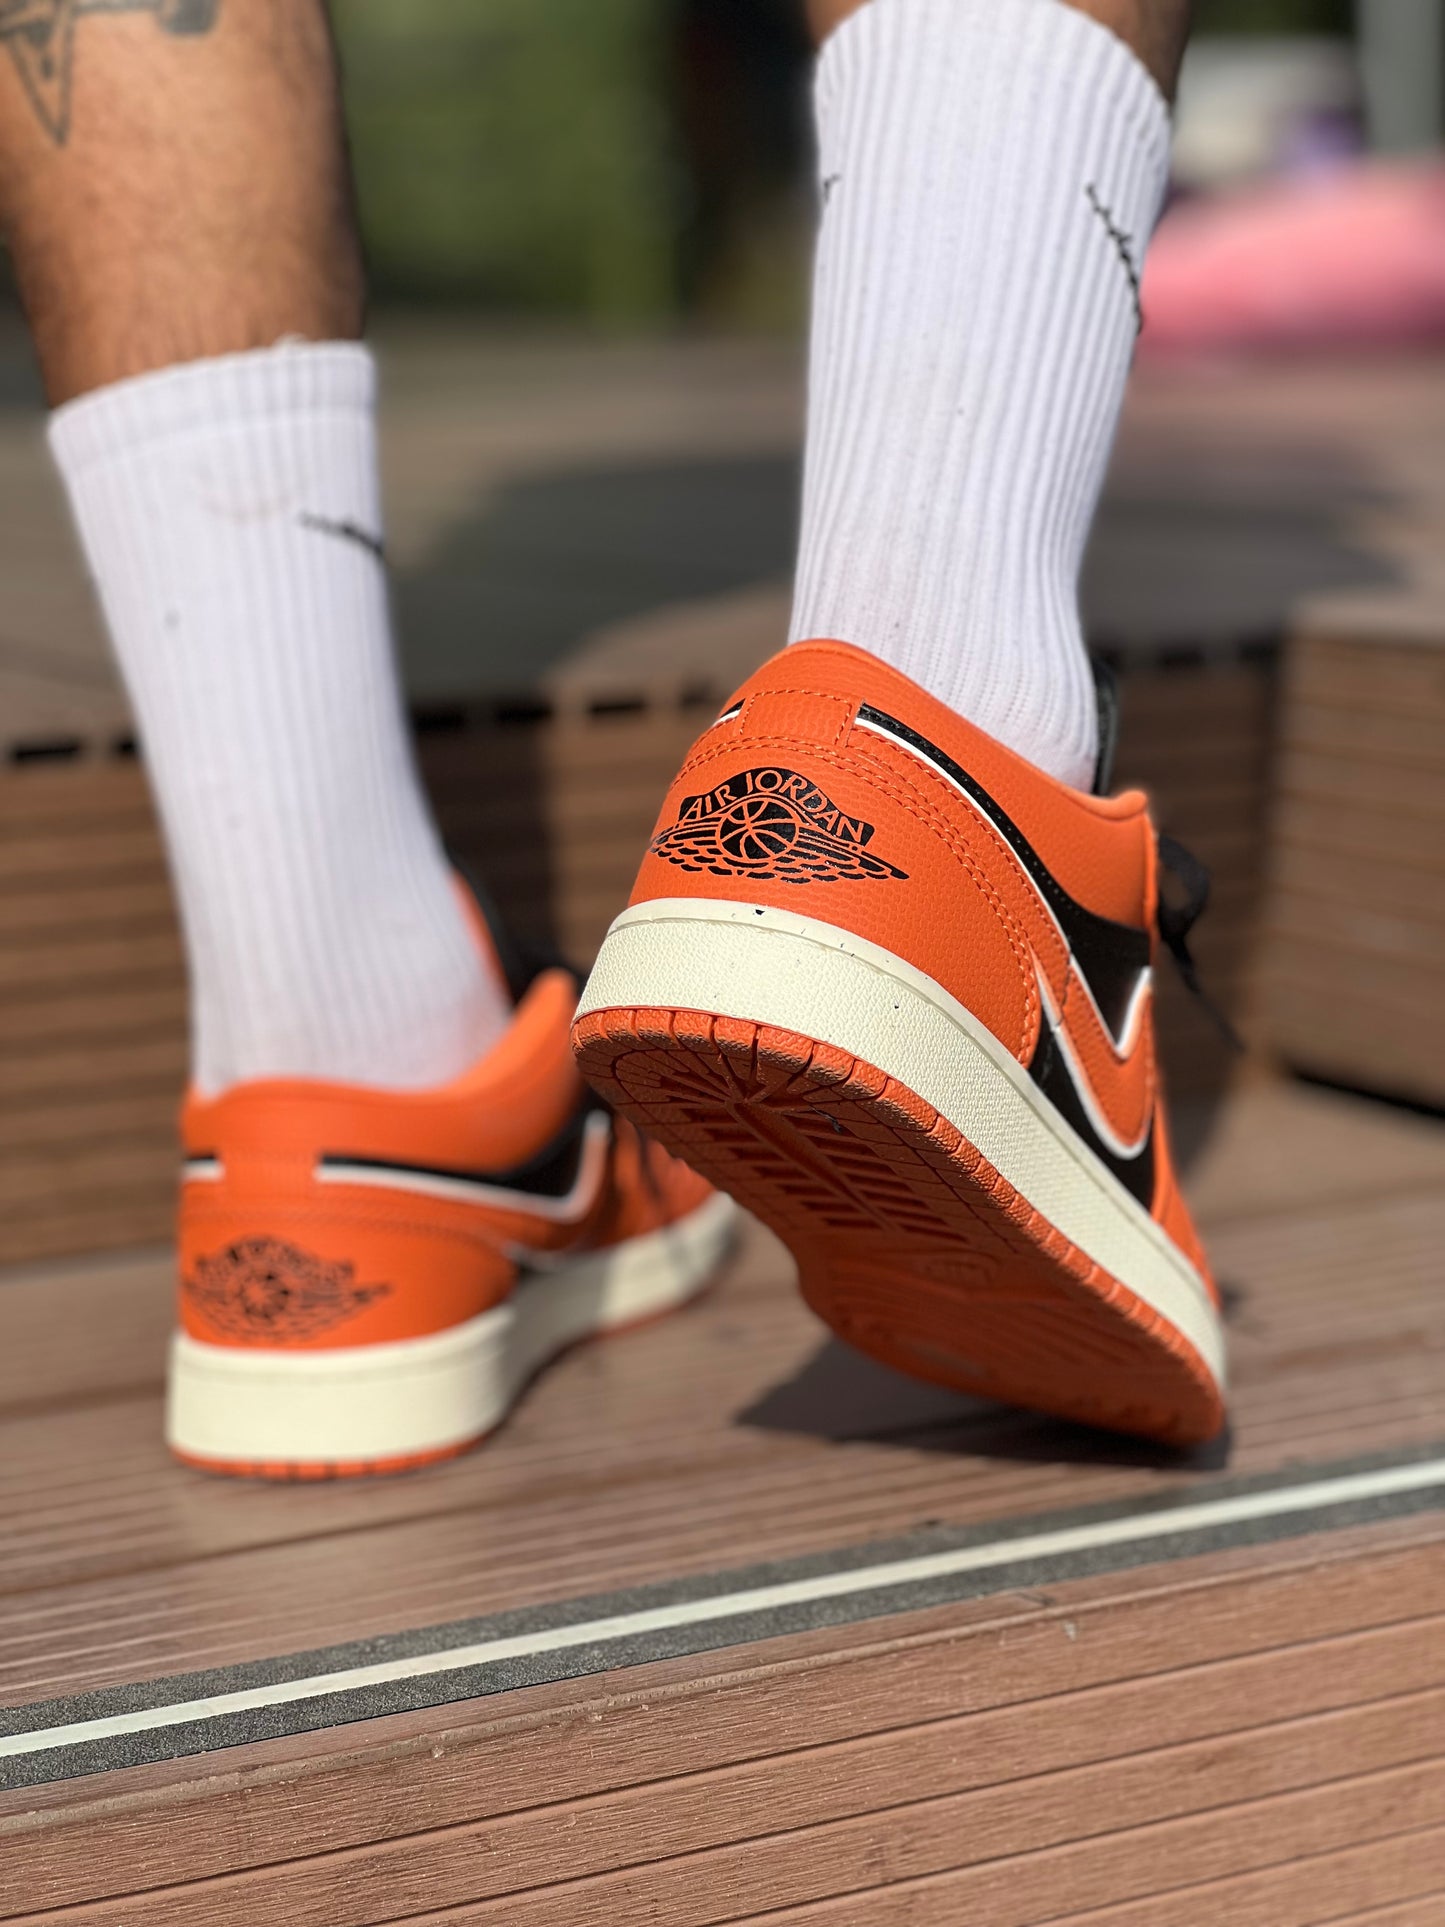 Nike Air Jordan 1 Low SE “Sport Spice”